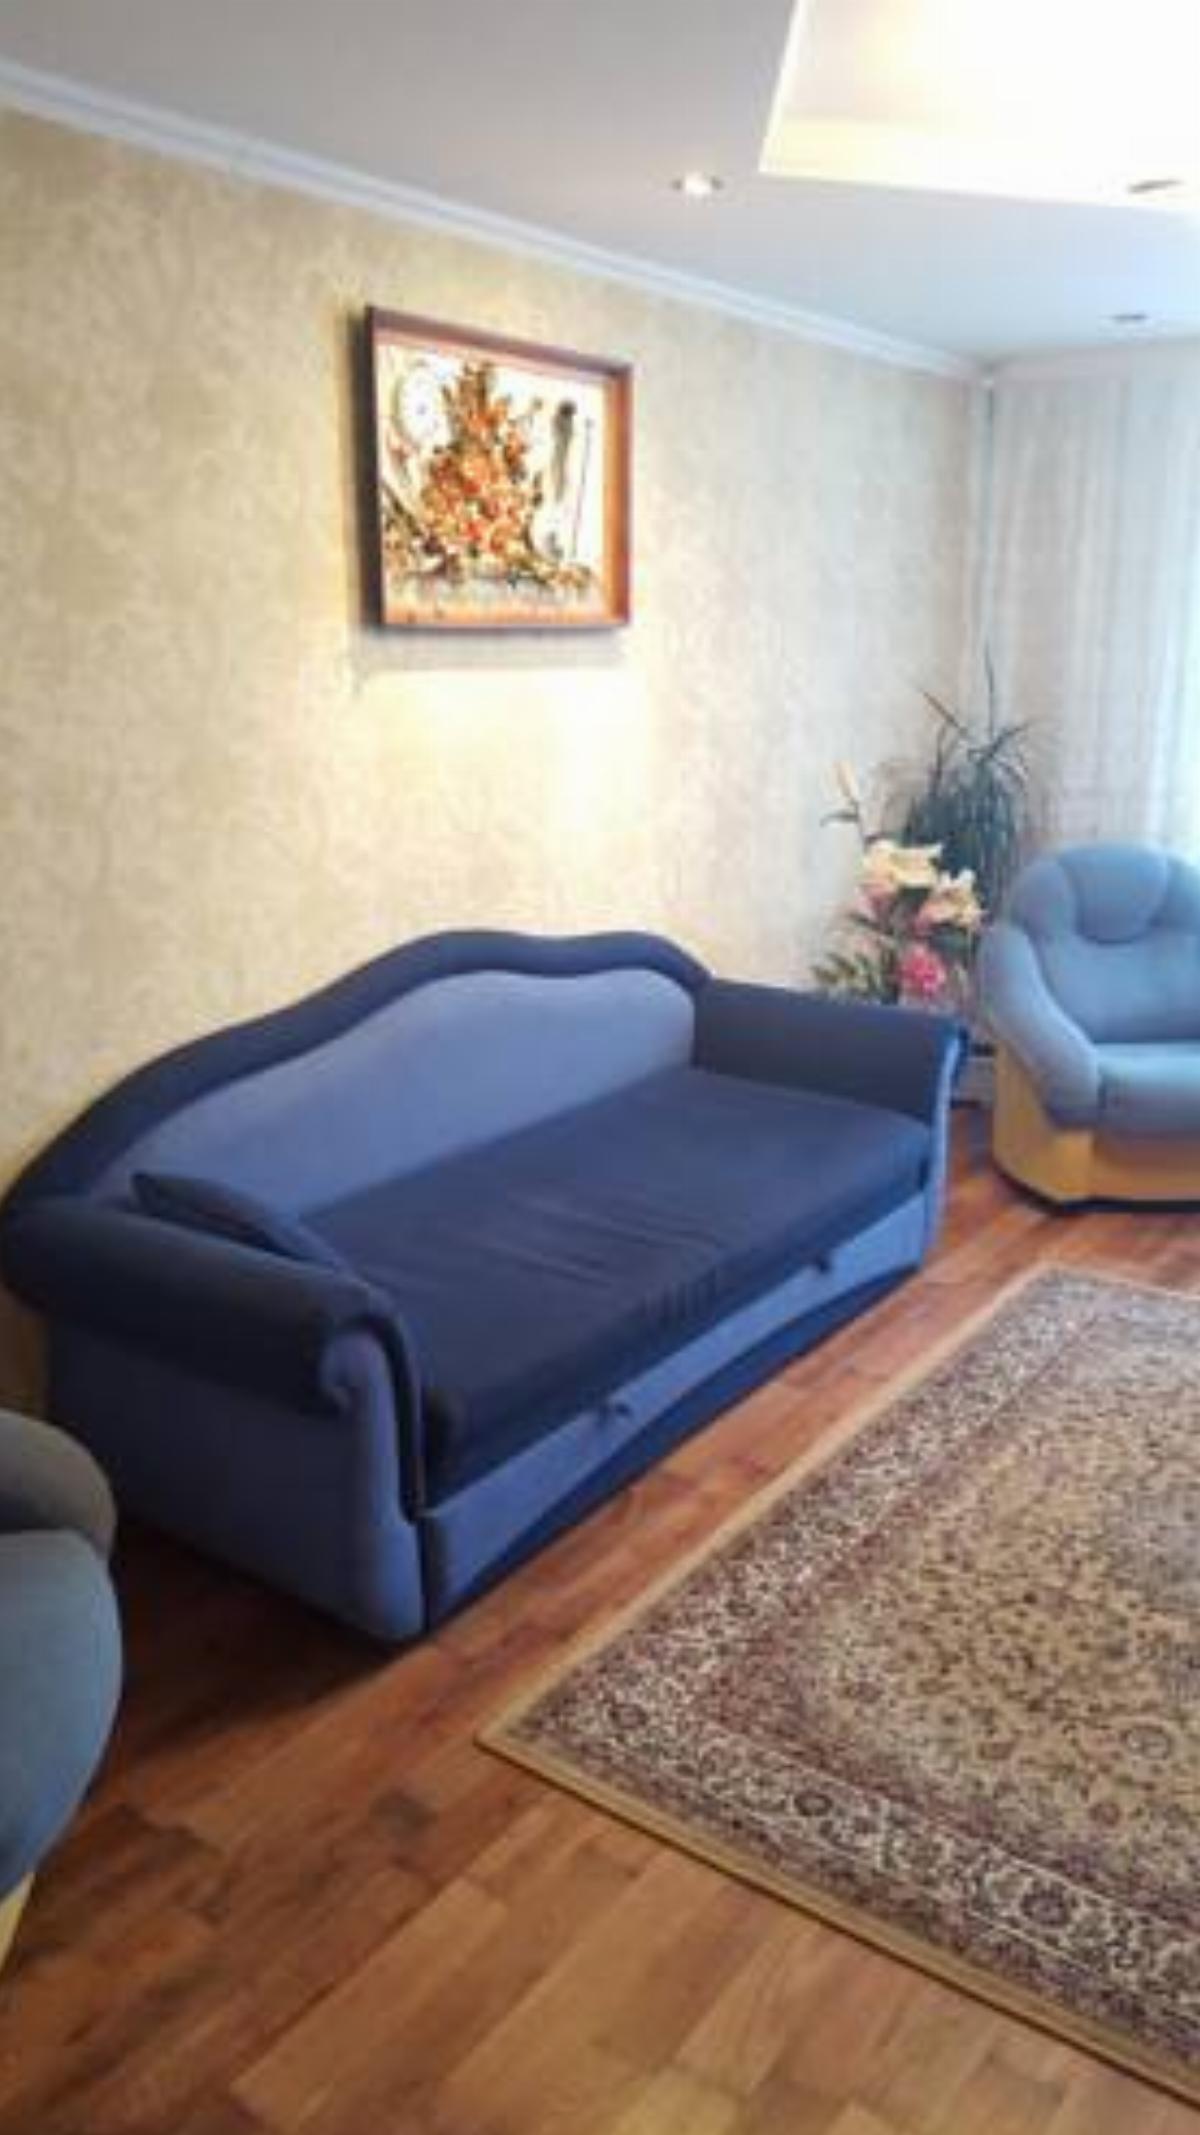 Apartment of Lida on Tyhachevscogo Hotel Lida Belarus